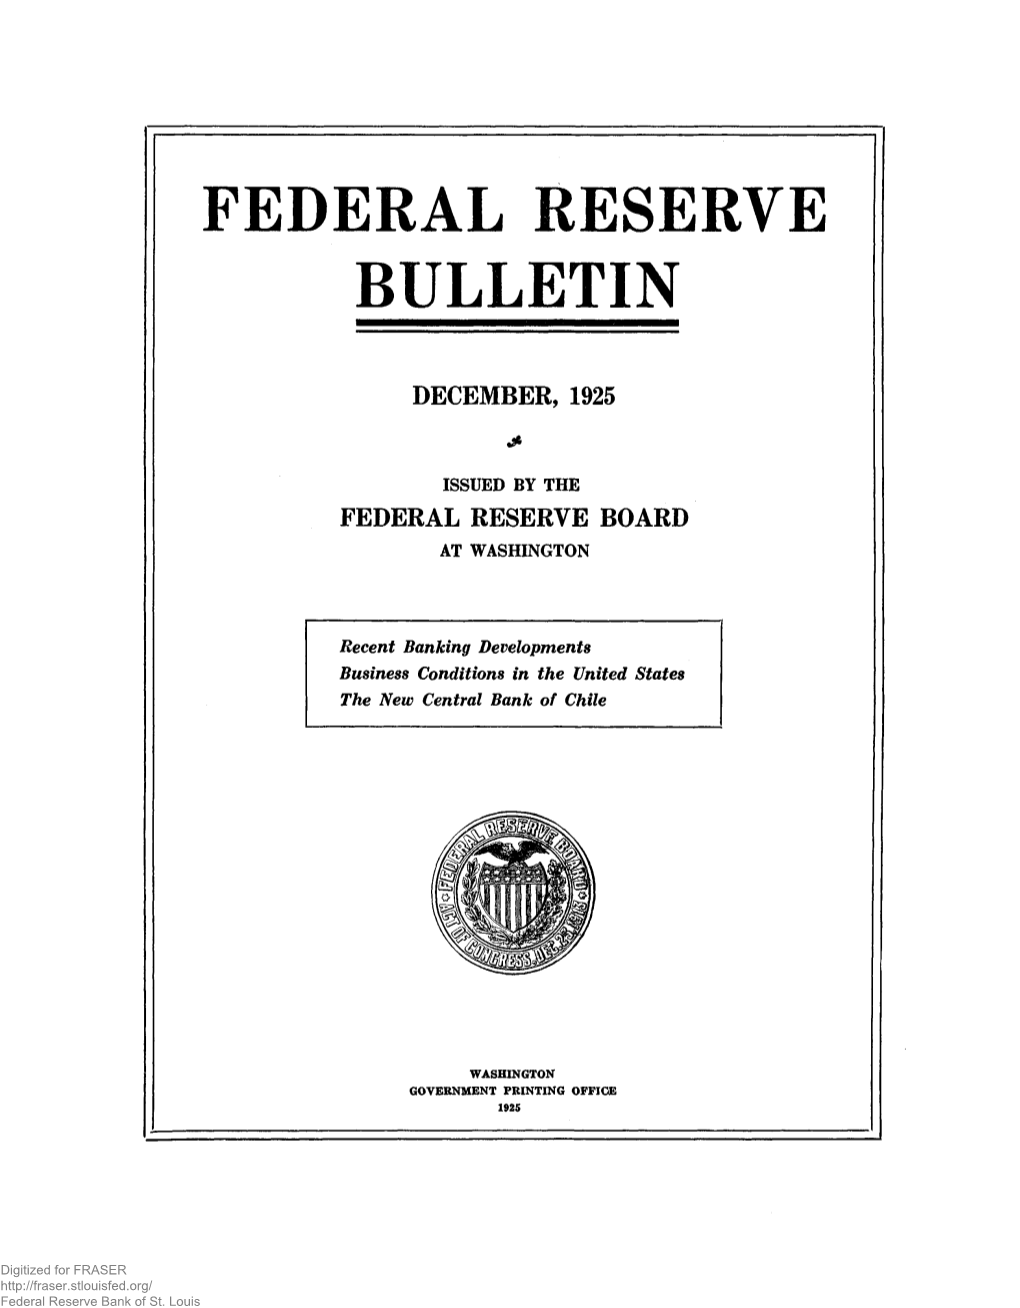 Federal Reserve Bulletin December 1925